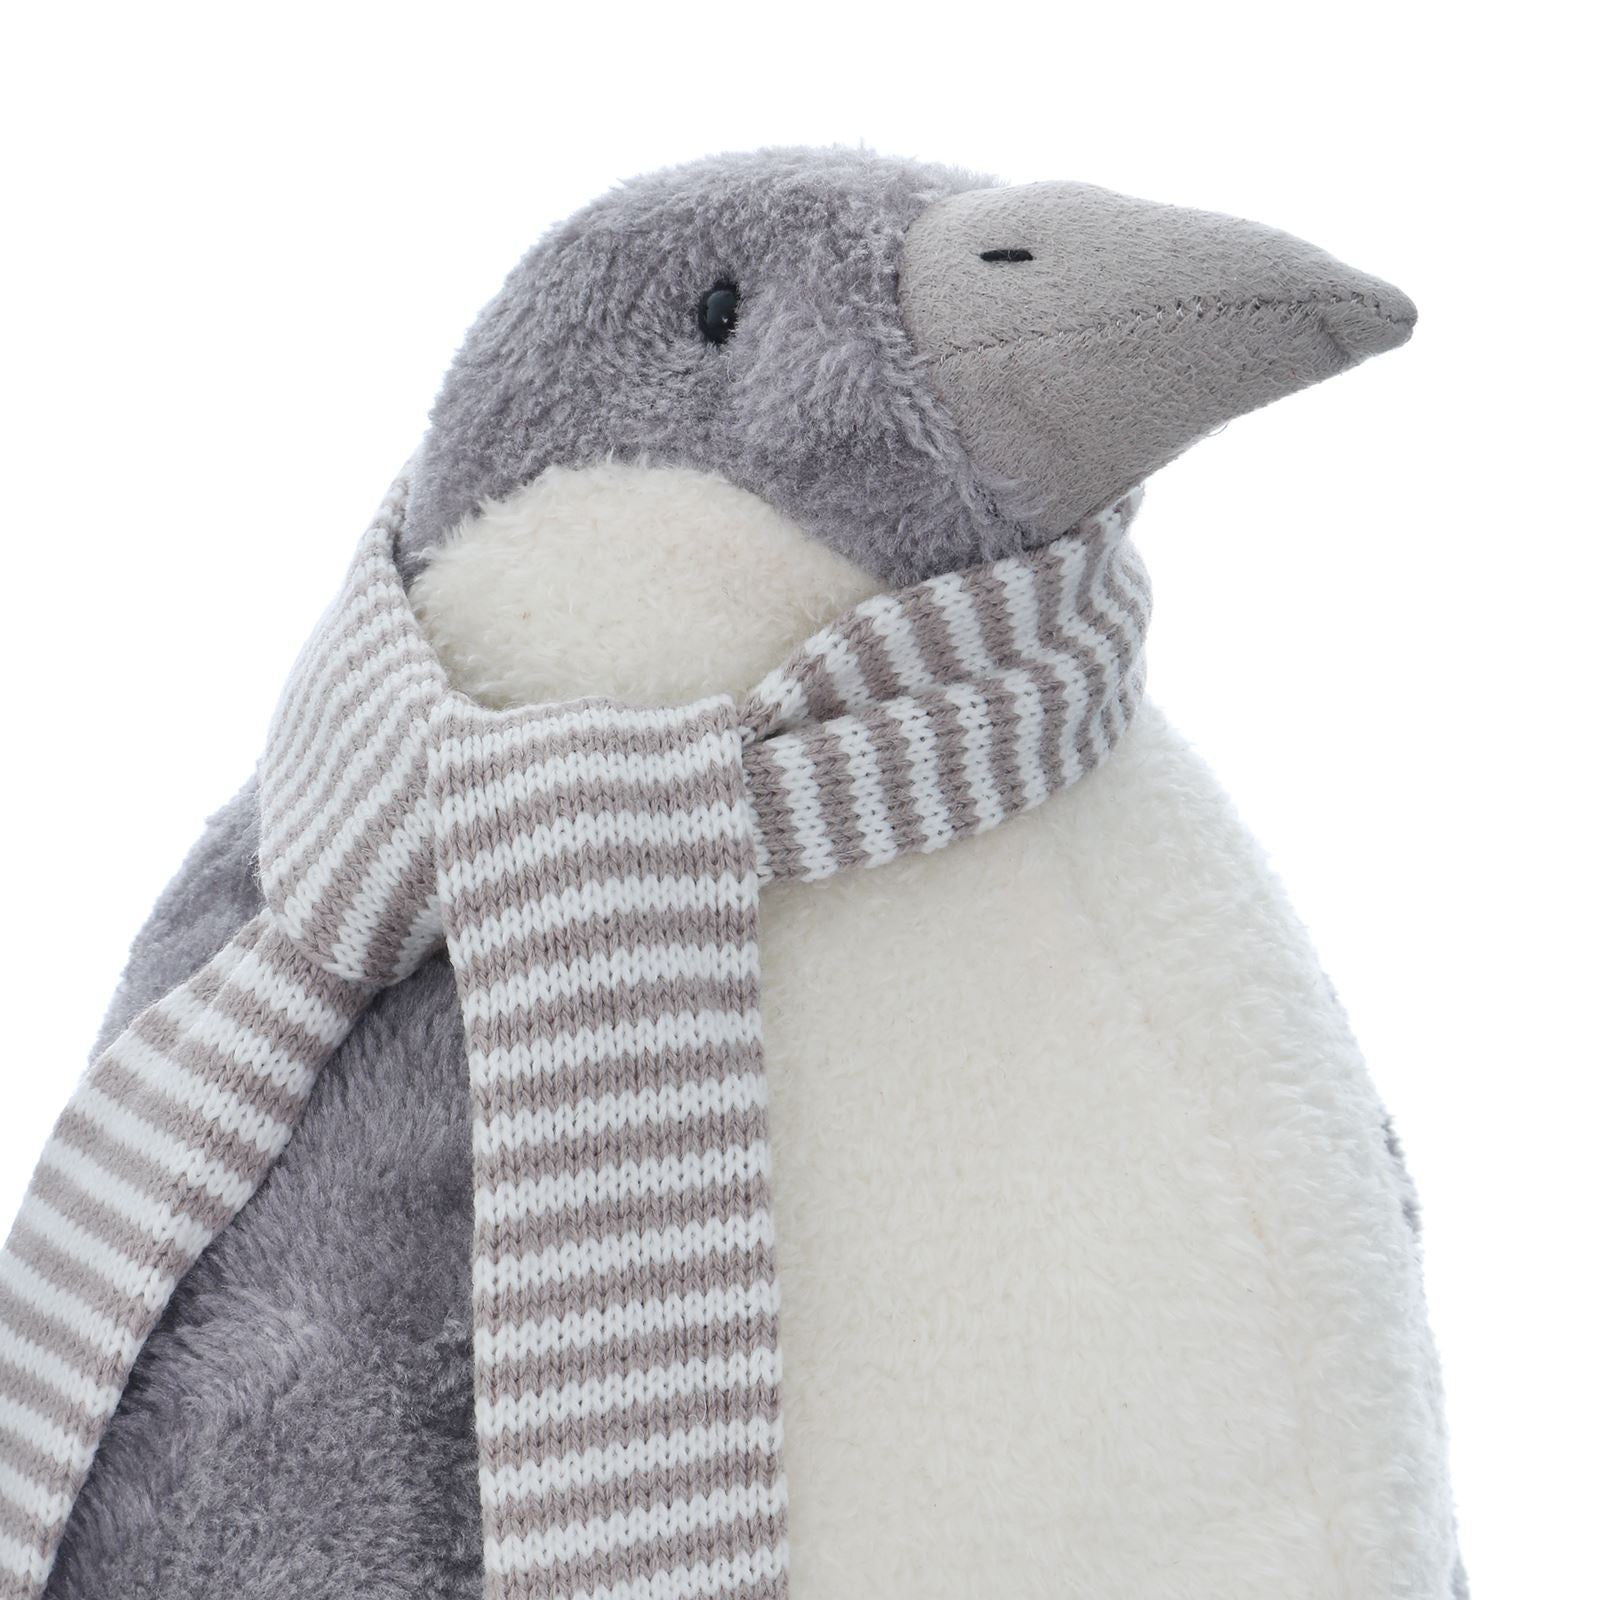 Mr Crimbo Plush Grey Penguin Standing Figure 36cm Tall - MrCrimbo.co.uk -XS5736 - -christmas decor